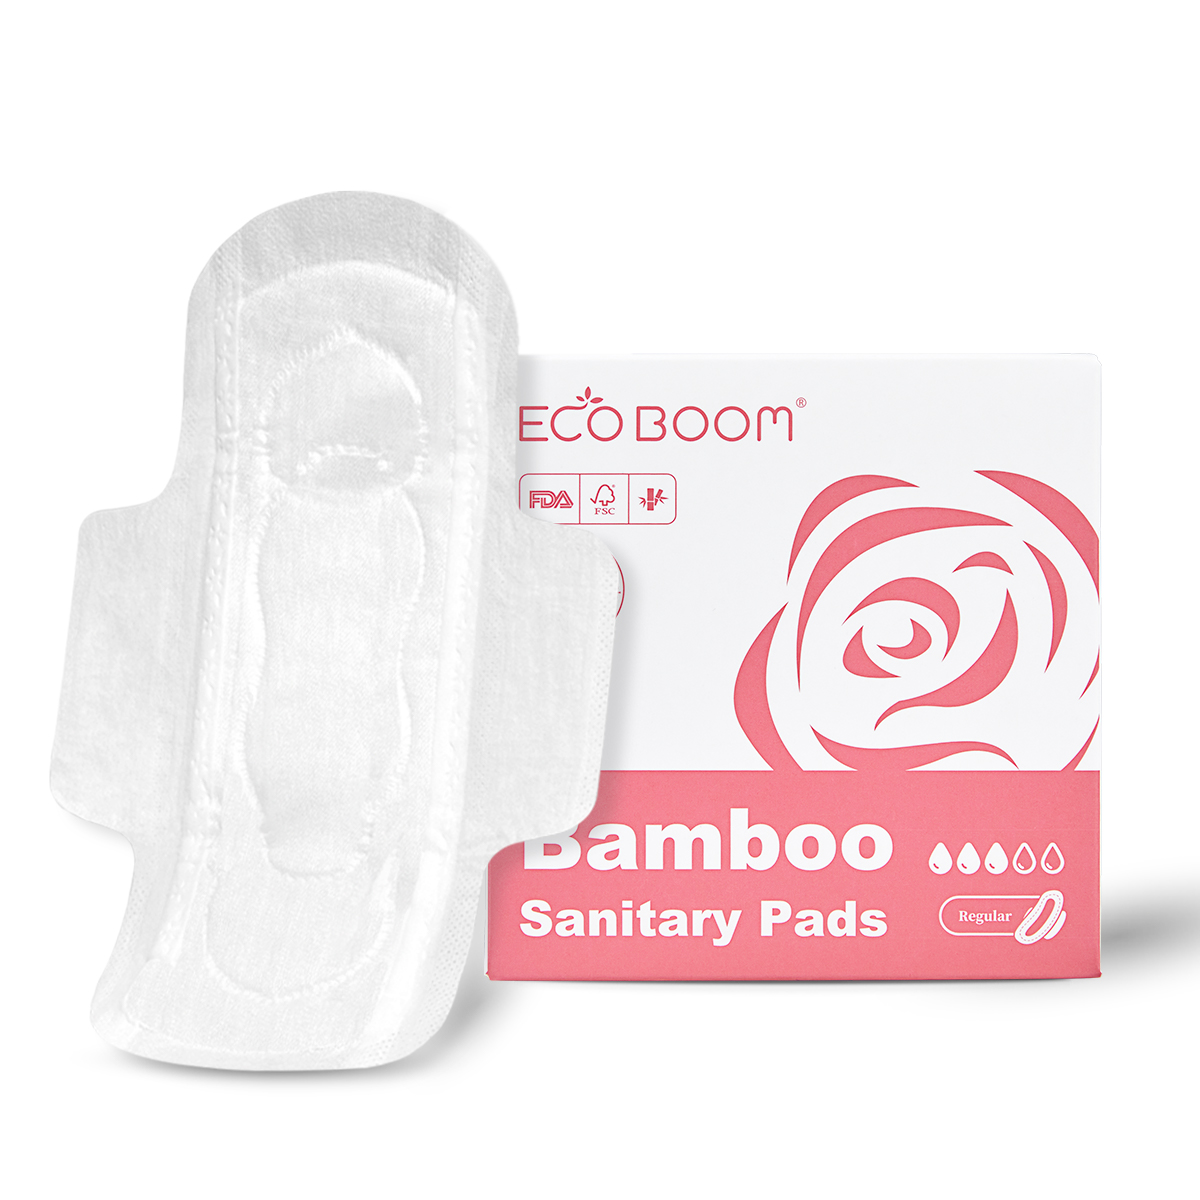 ECO BOOM bamboo sanitary pads factory-2